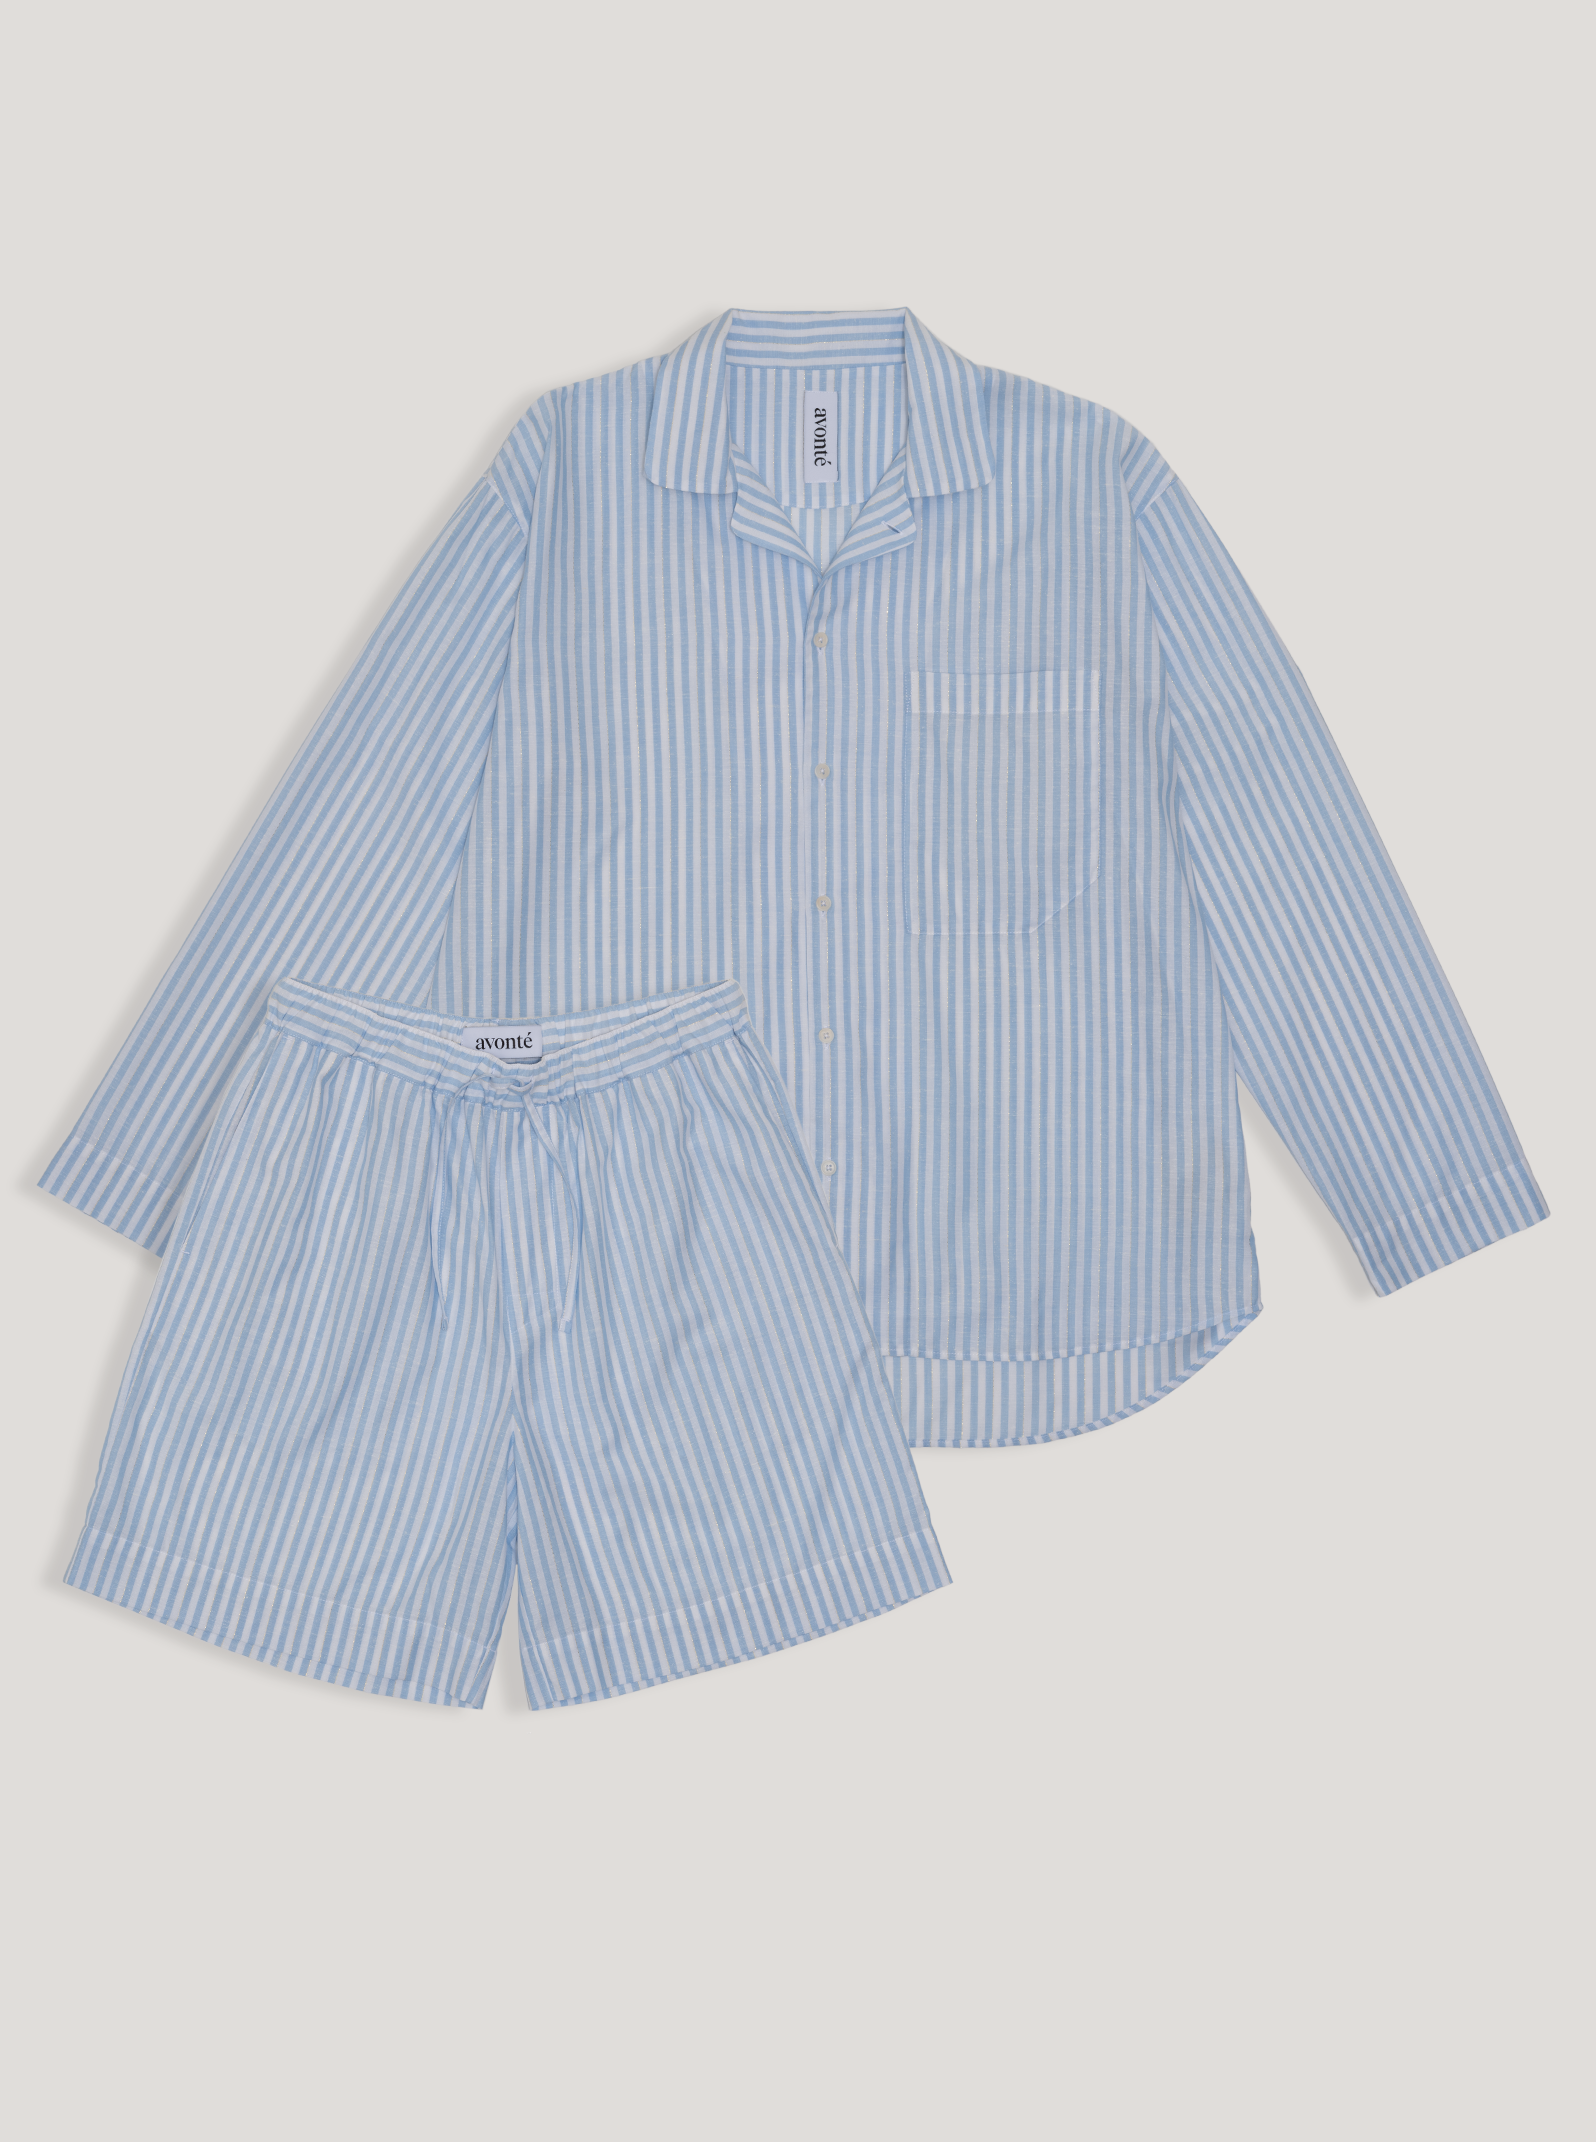 Pyjama Set (Shirt+ Shorts) - golden clouds stripe